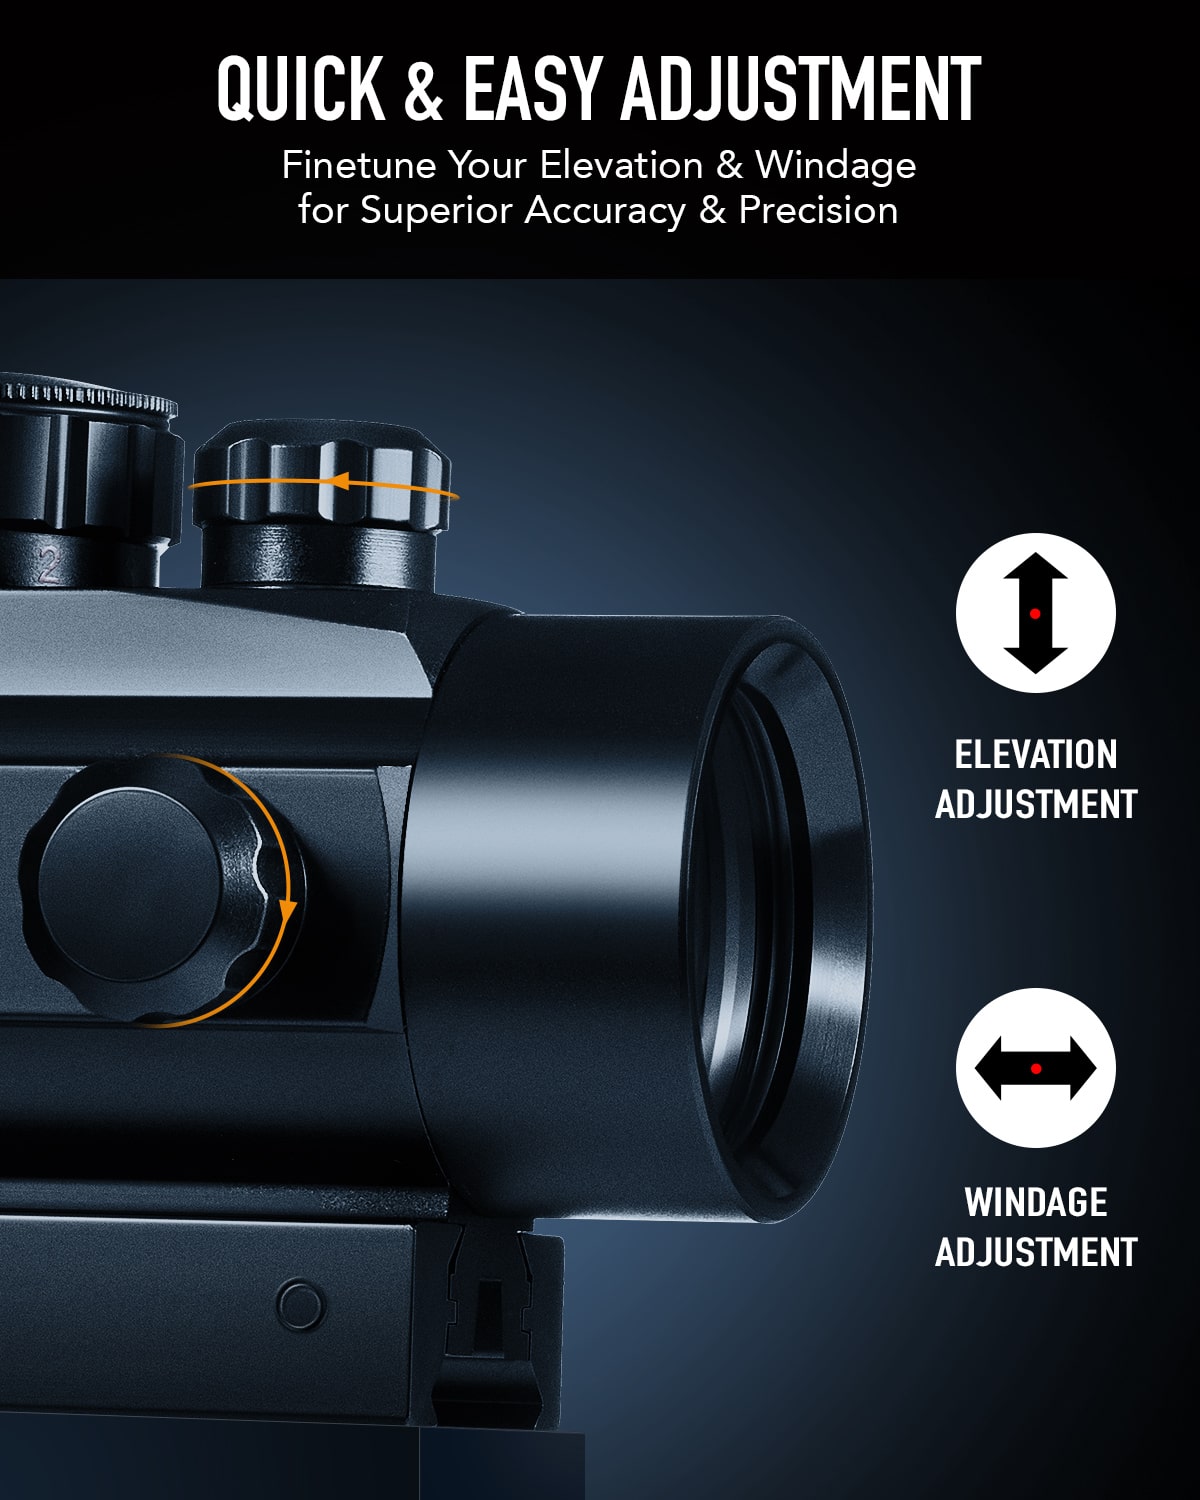 1x40mm Reflex Red Green Dot Sight Riflescope with Free 11mm & 20mm Mount Rails